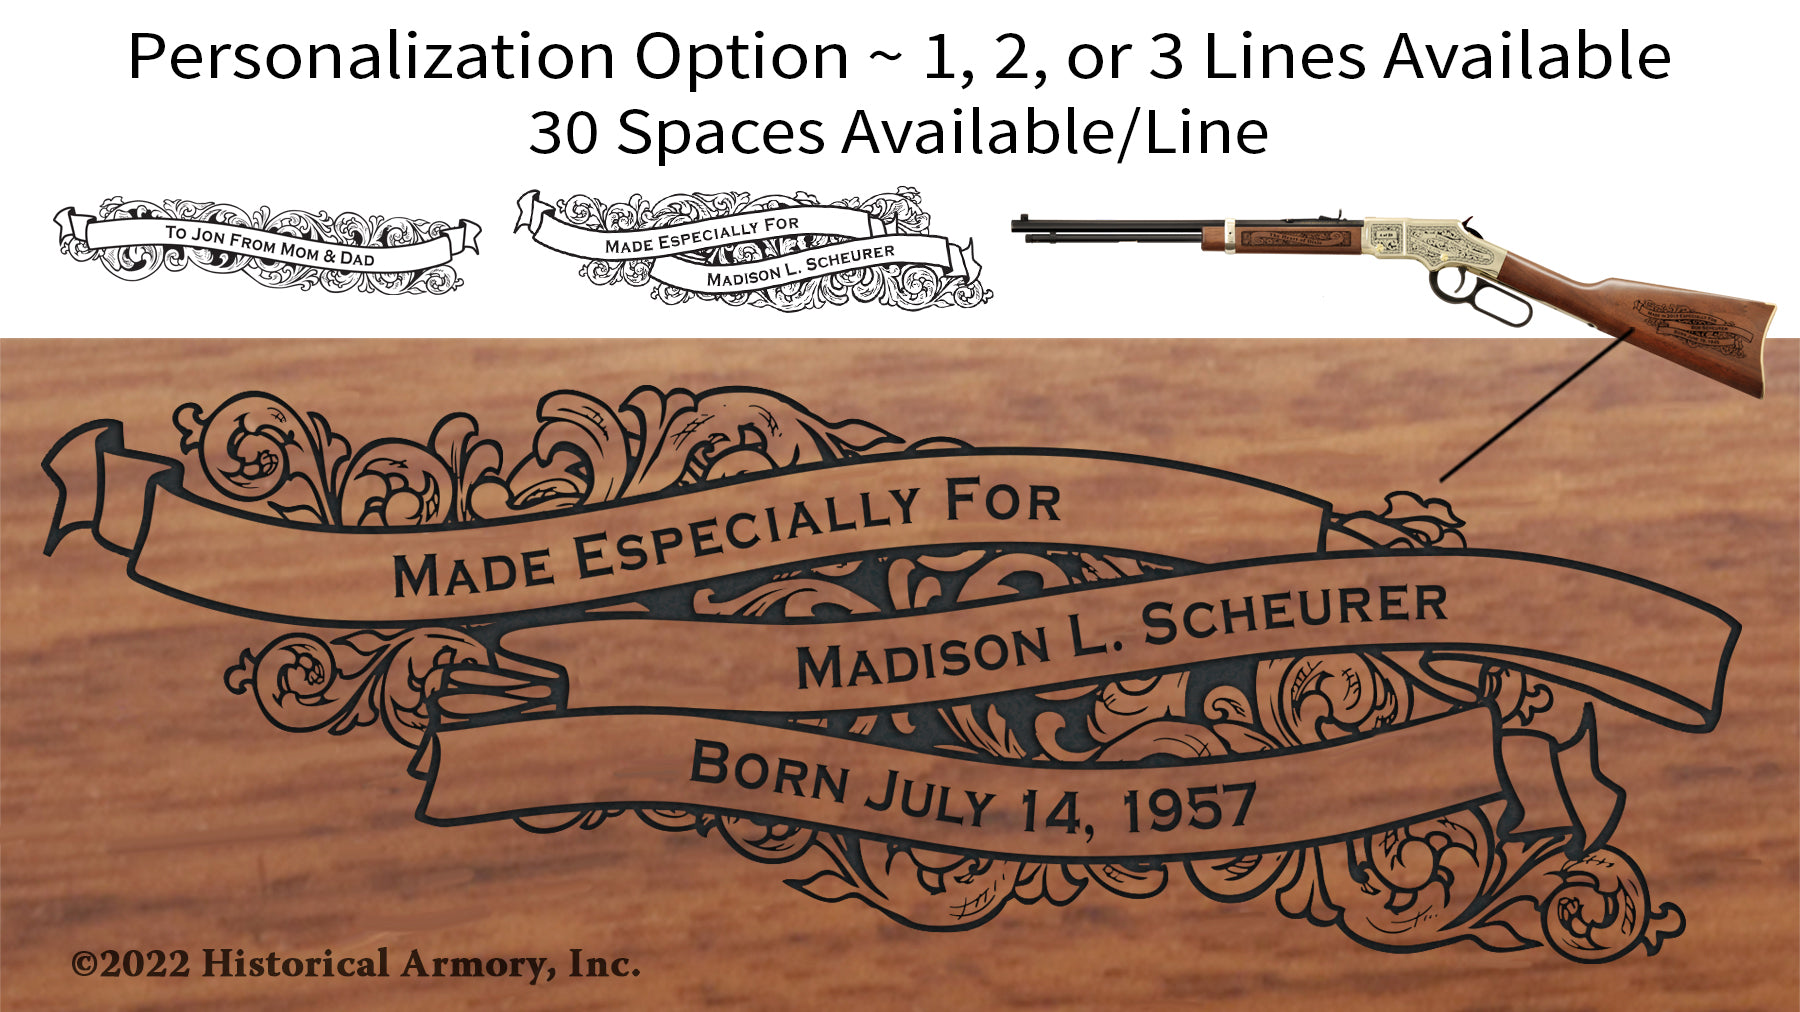 Door County Wisconsin Engraved Rifle Personalization